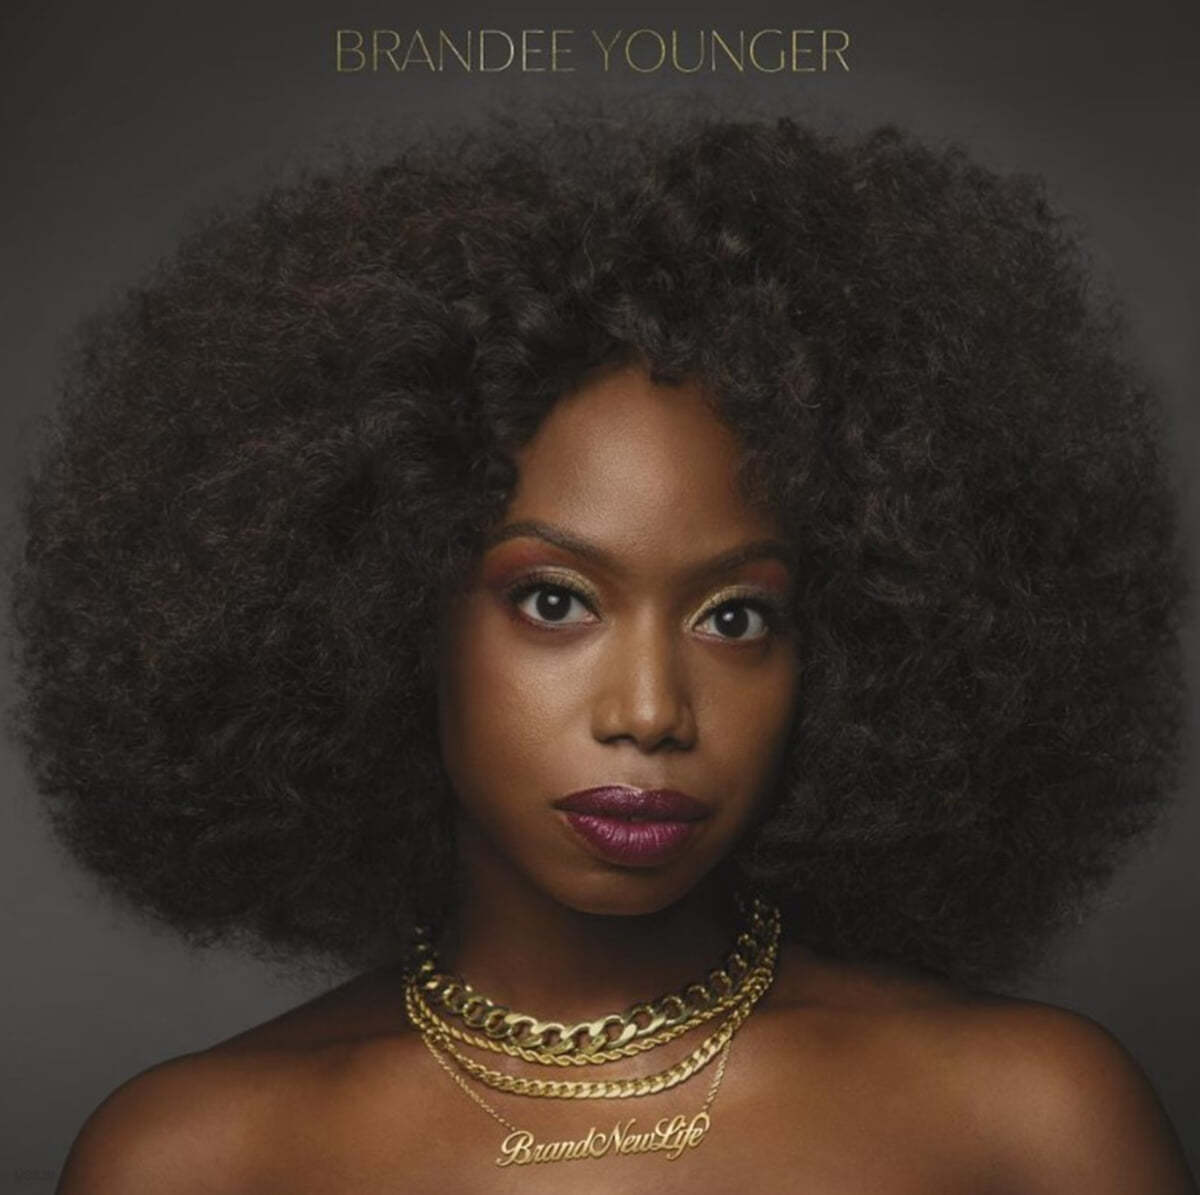 Brandee Younger (브랜디 영거) - Brand New Life [LP]